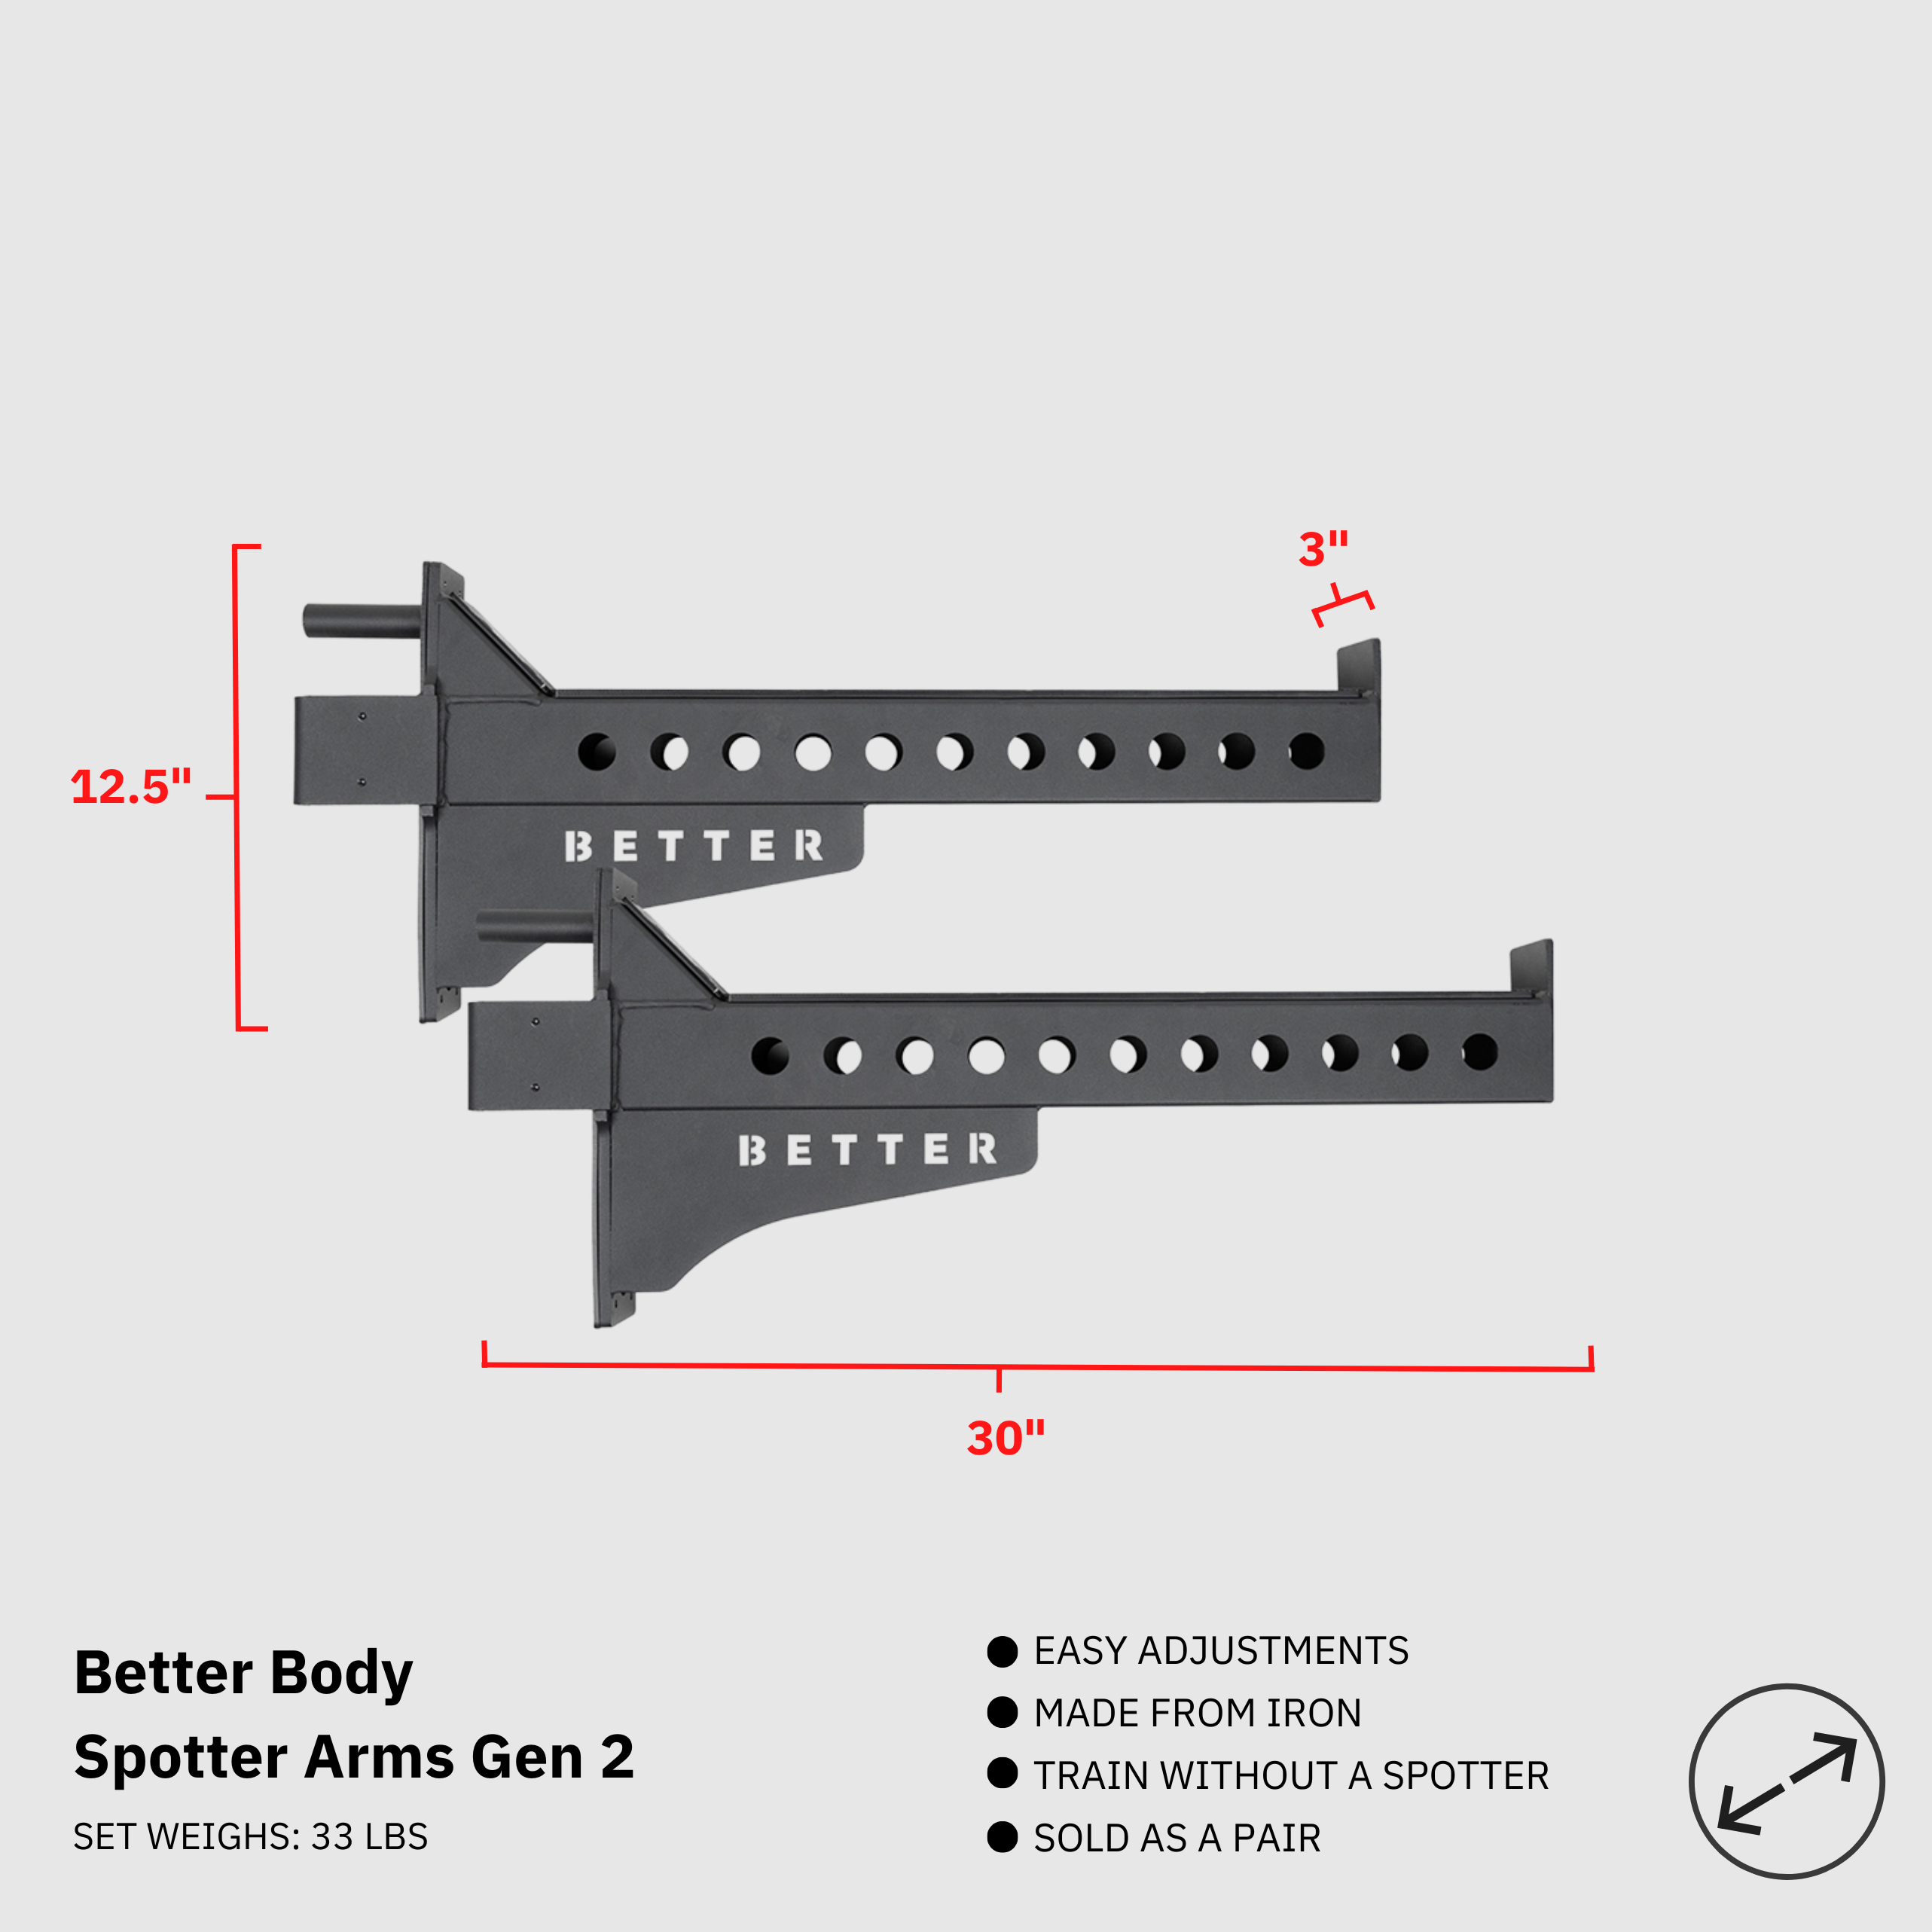 Spotter Arms Footprint